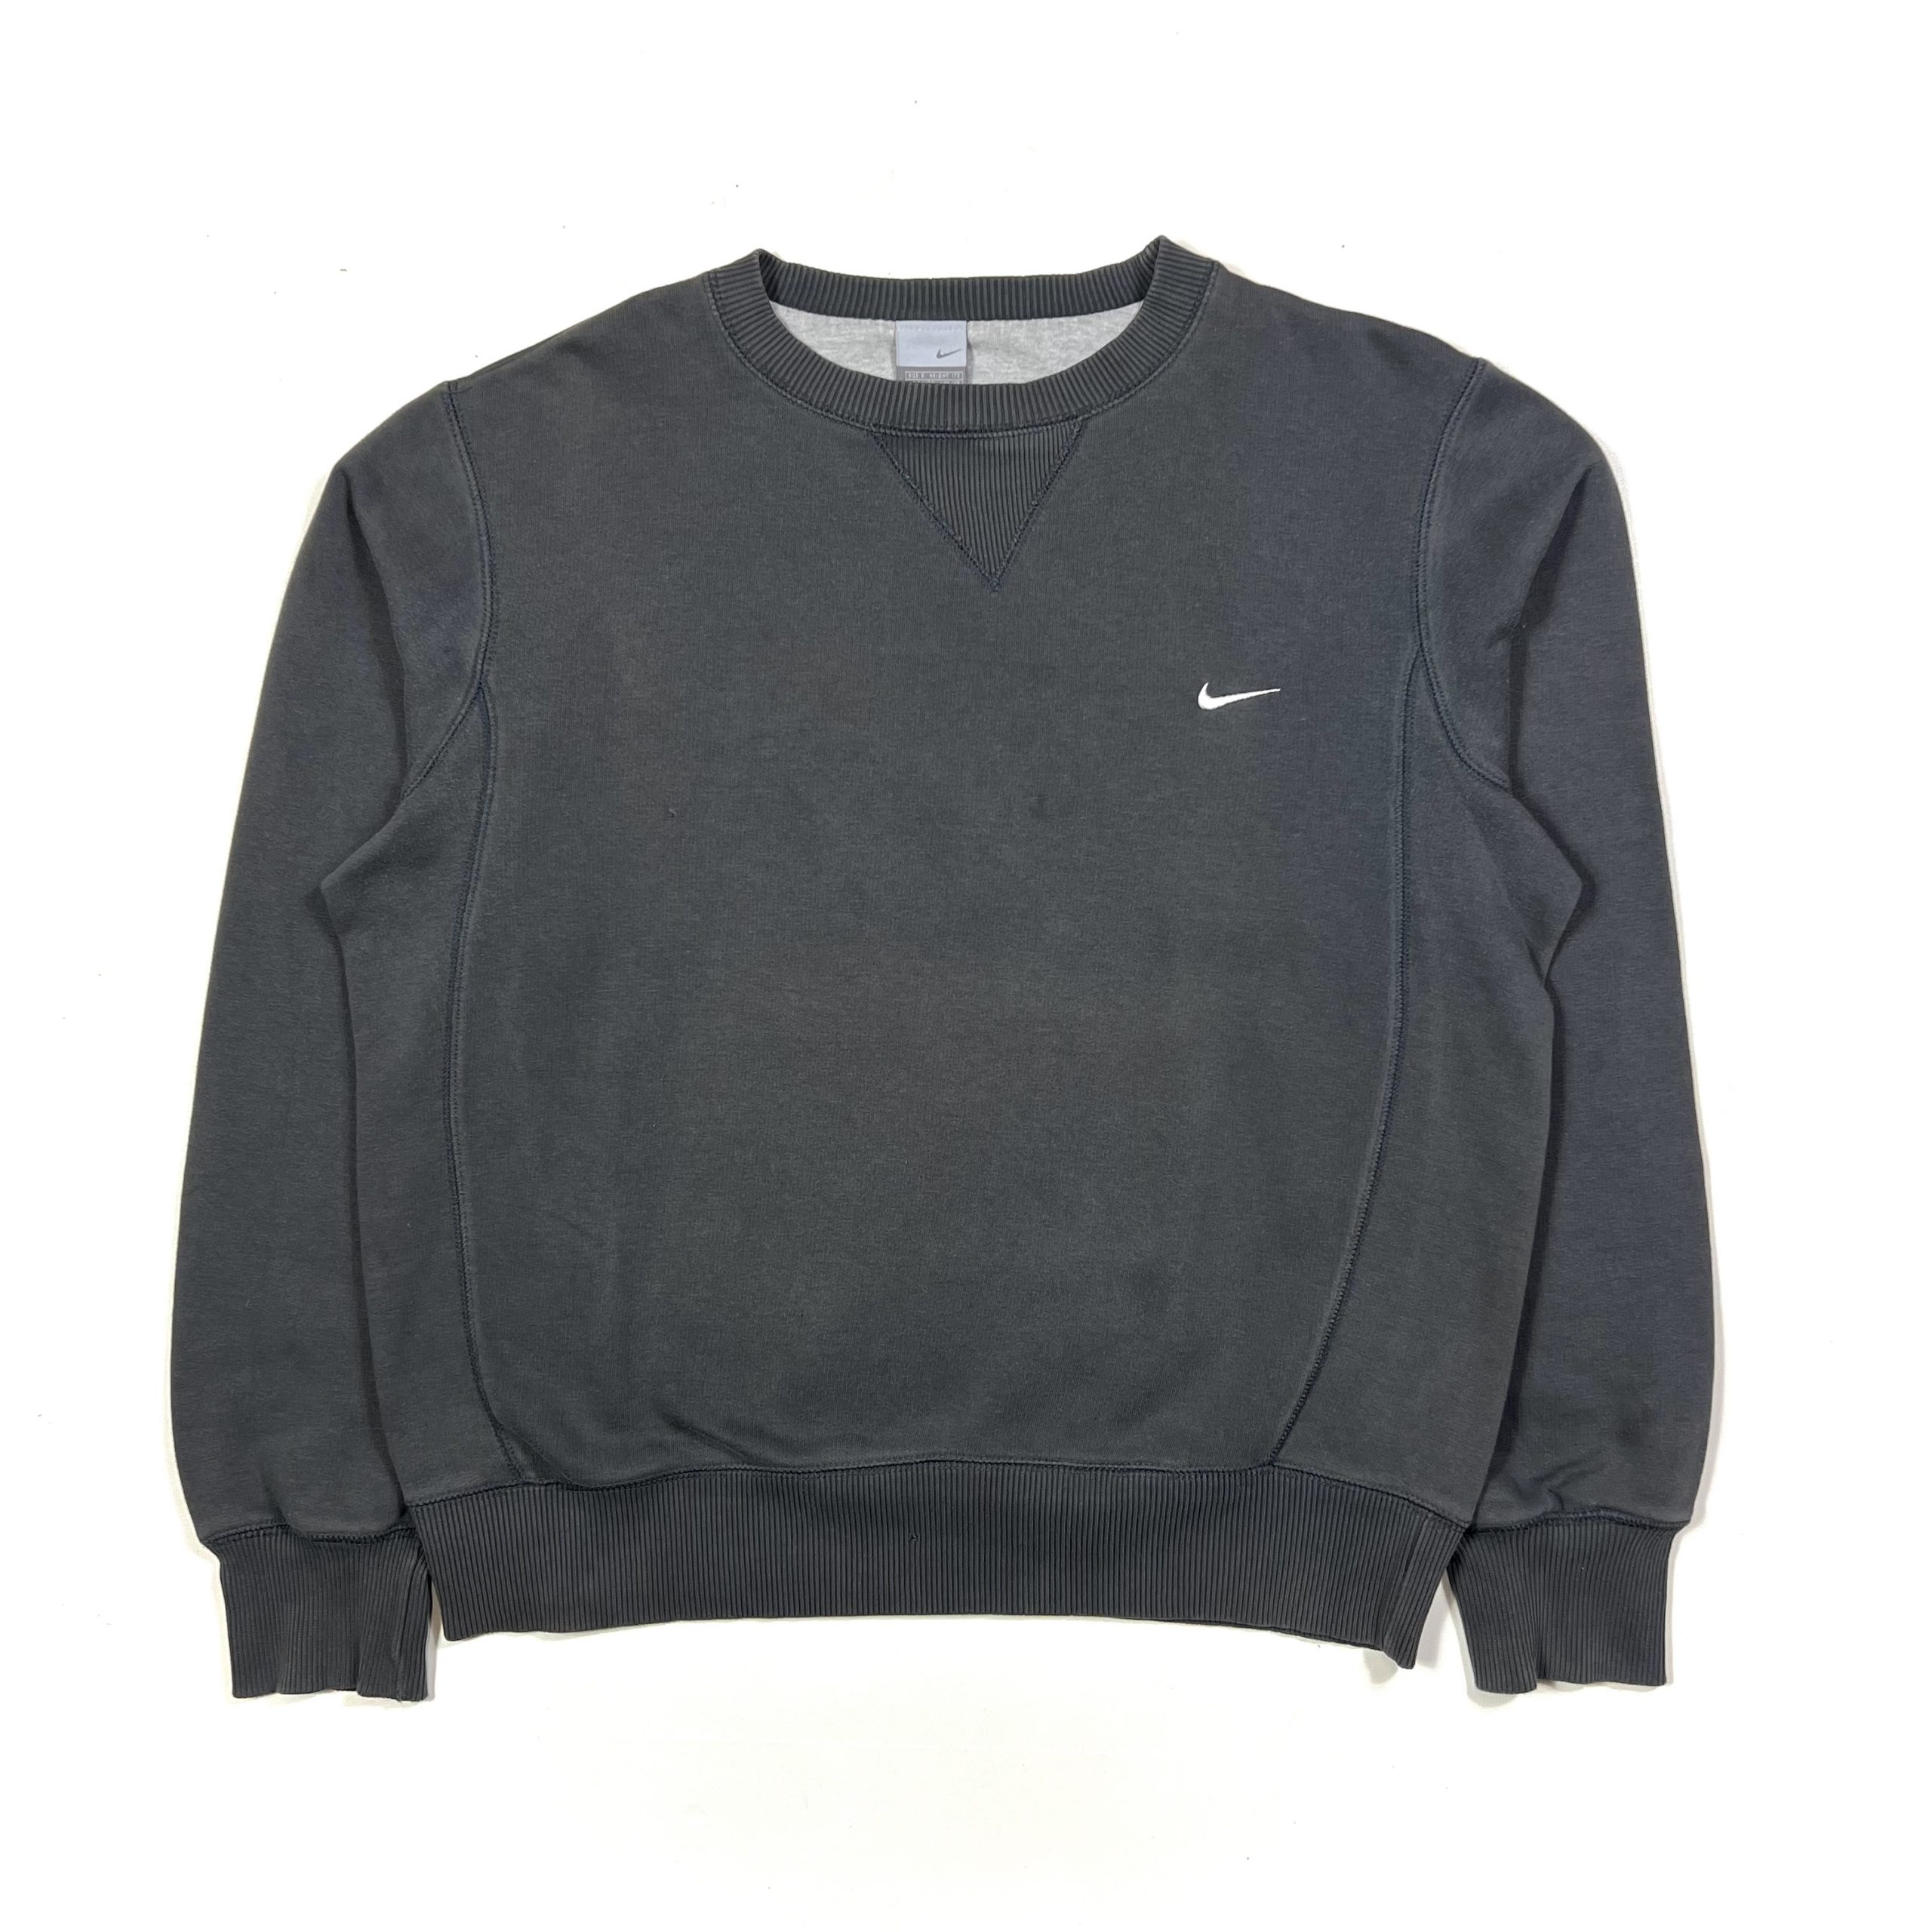 Nike Swoosh Sweatshirt - Grey - TMC Vintage - Vintage Clothing